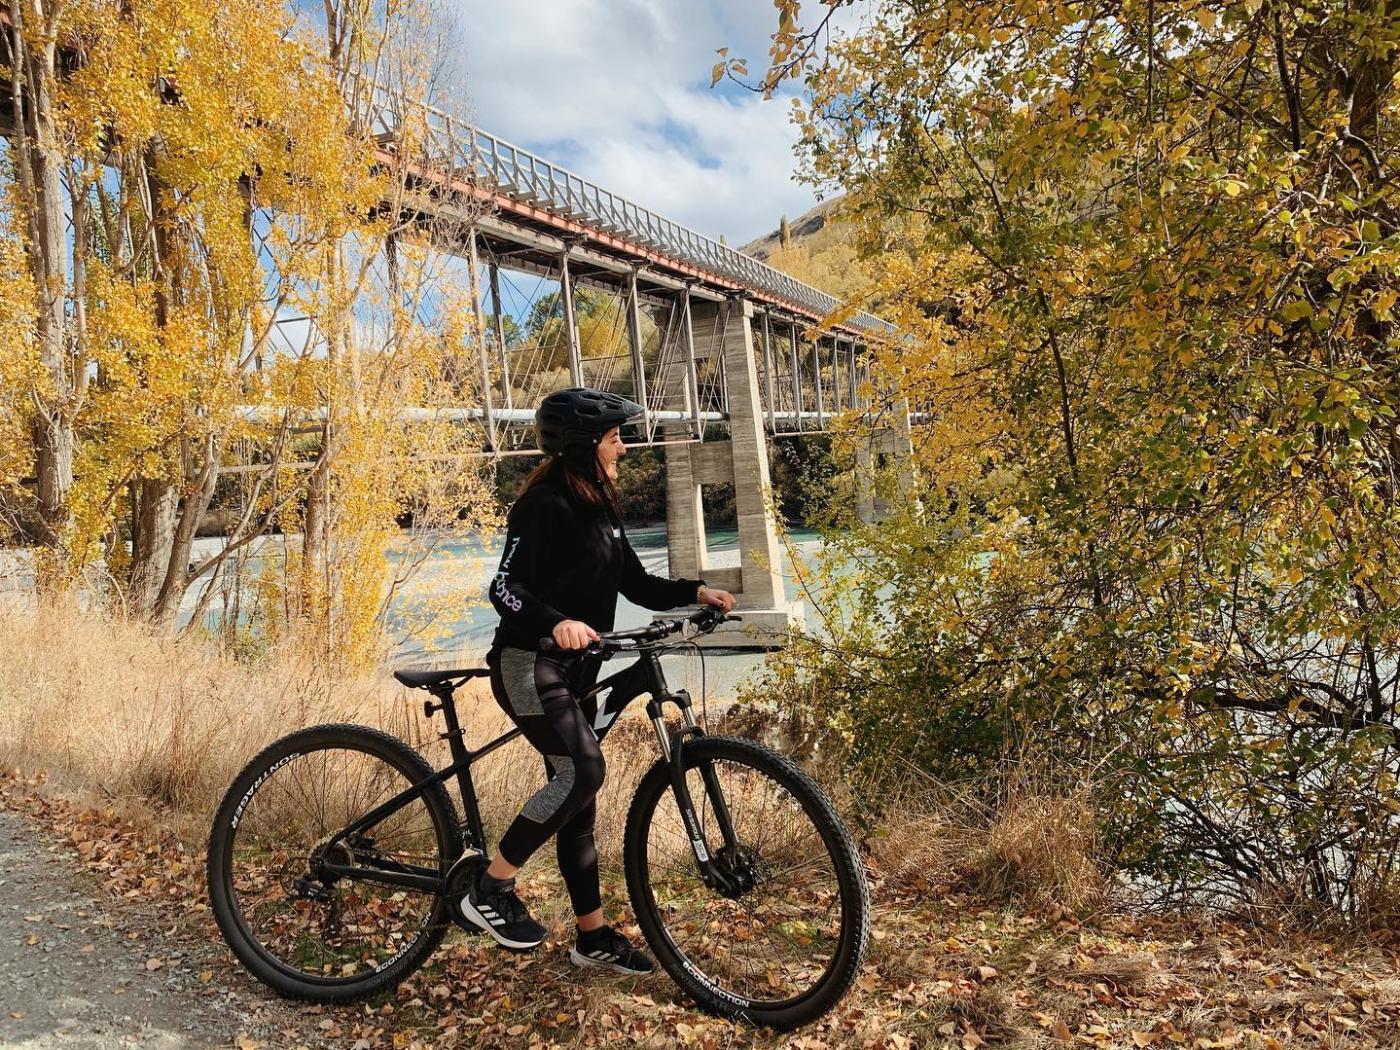 Biking the Twin Rivers Trail in Autumn, beside the Lower Shotover Bridge